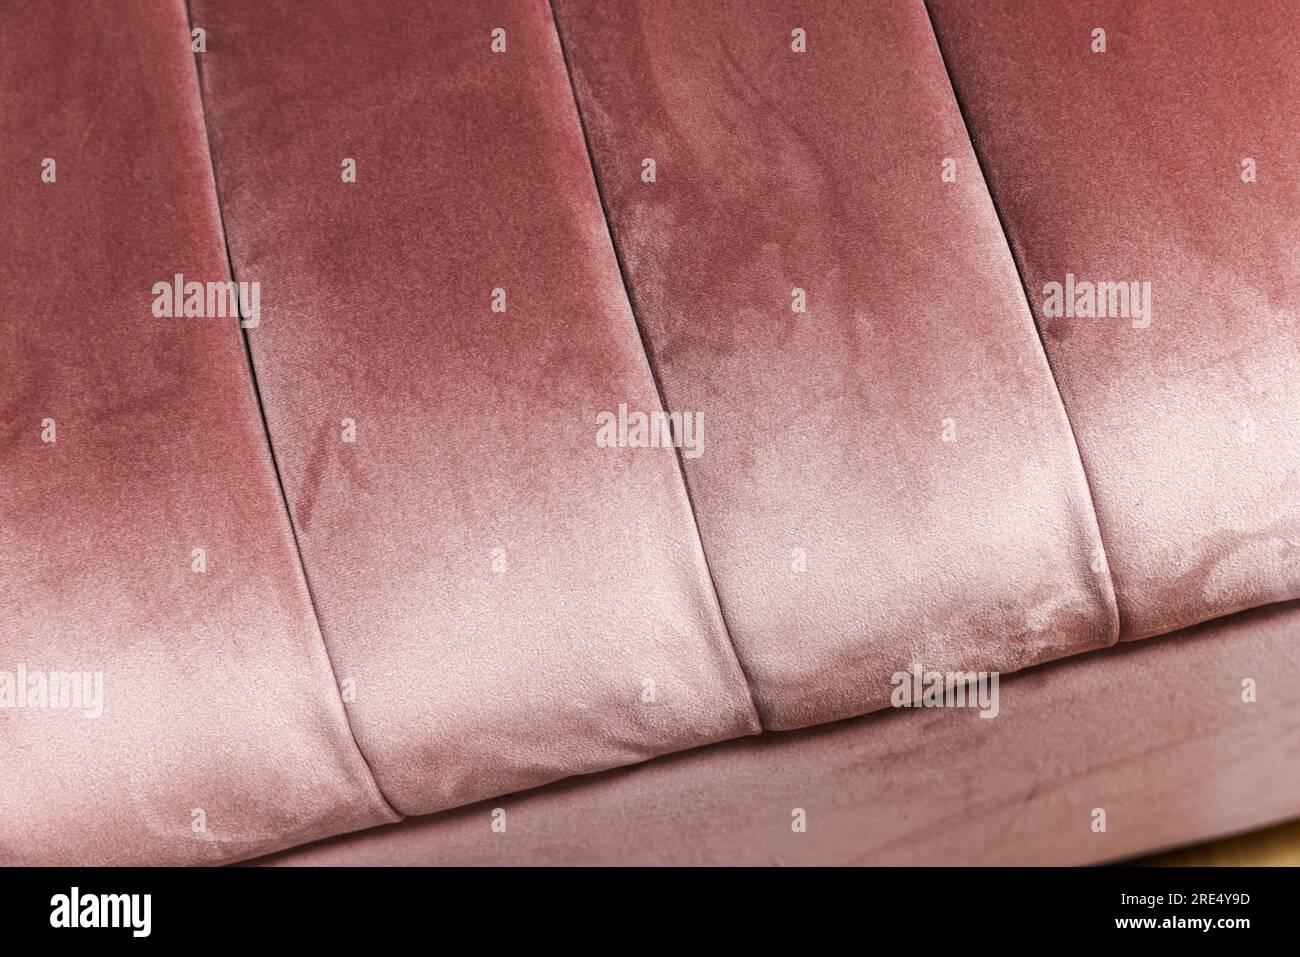 Pink flocking fabric of sofa pillows, close up background photo Stock Photo